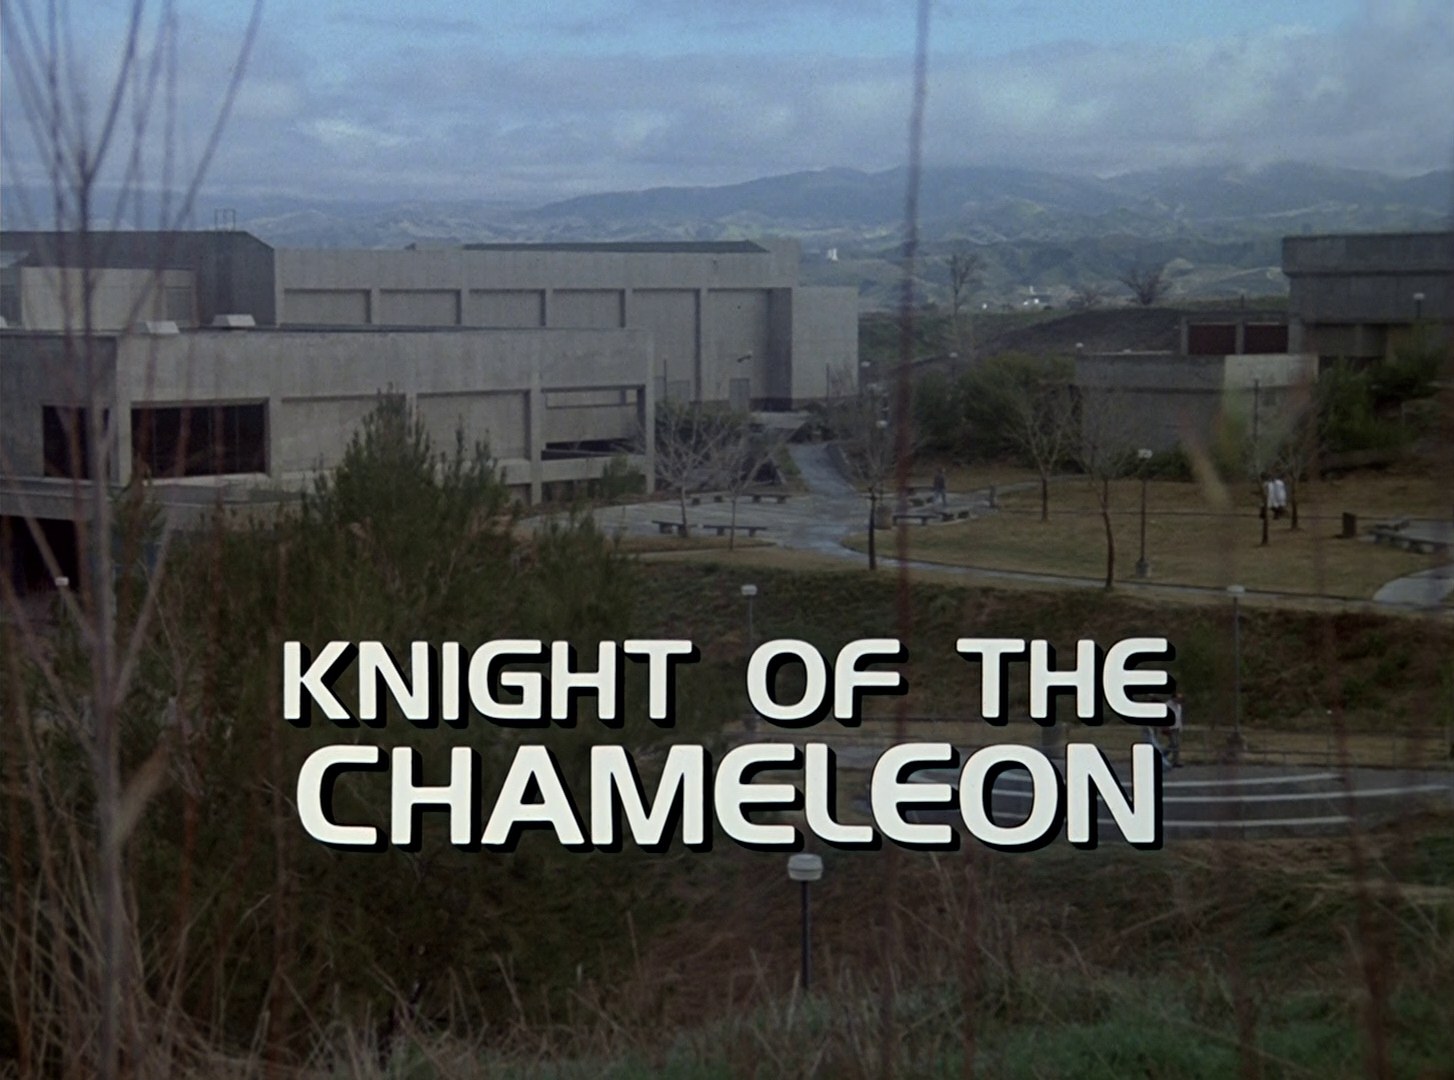 Knight Rider Season 3 - Episode 52 - Knight Of The Chameleon - Photo 1